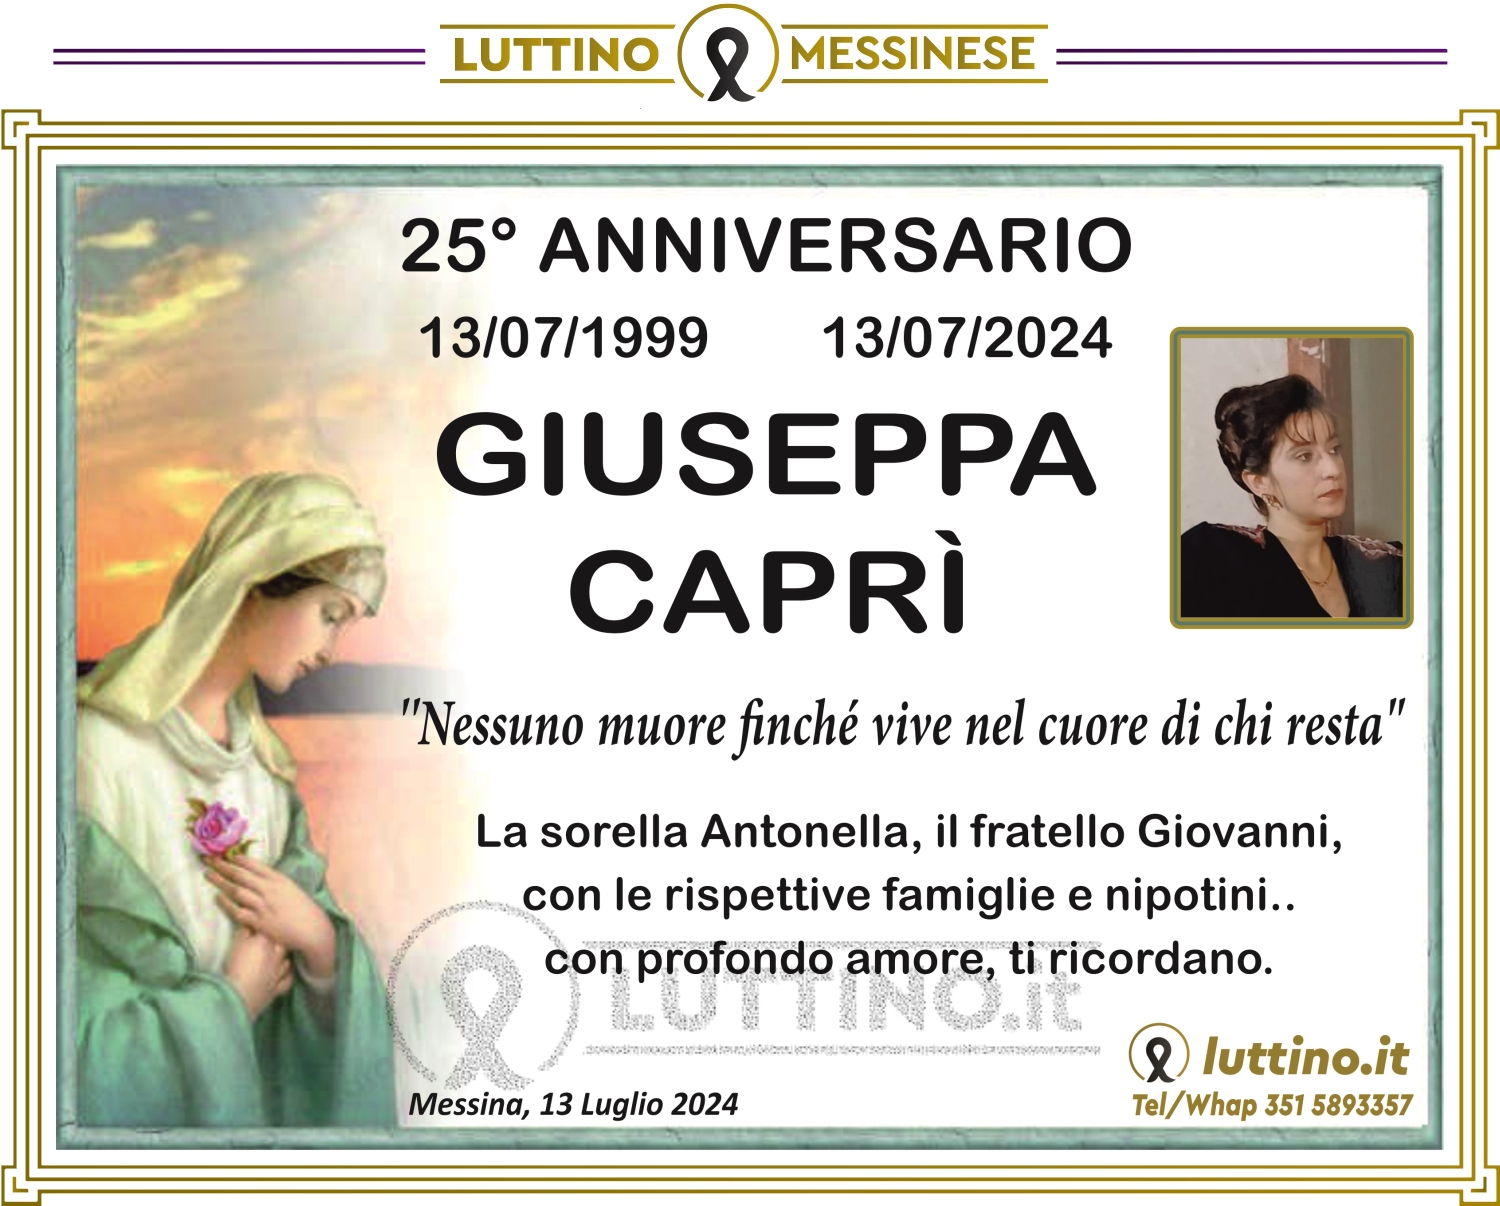 Giuseppa Caprì